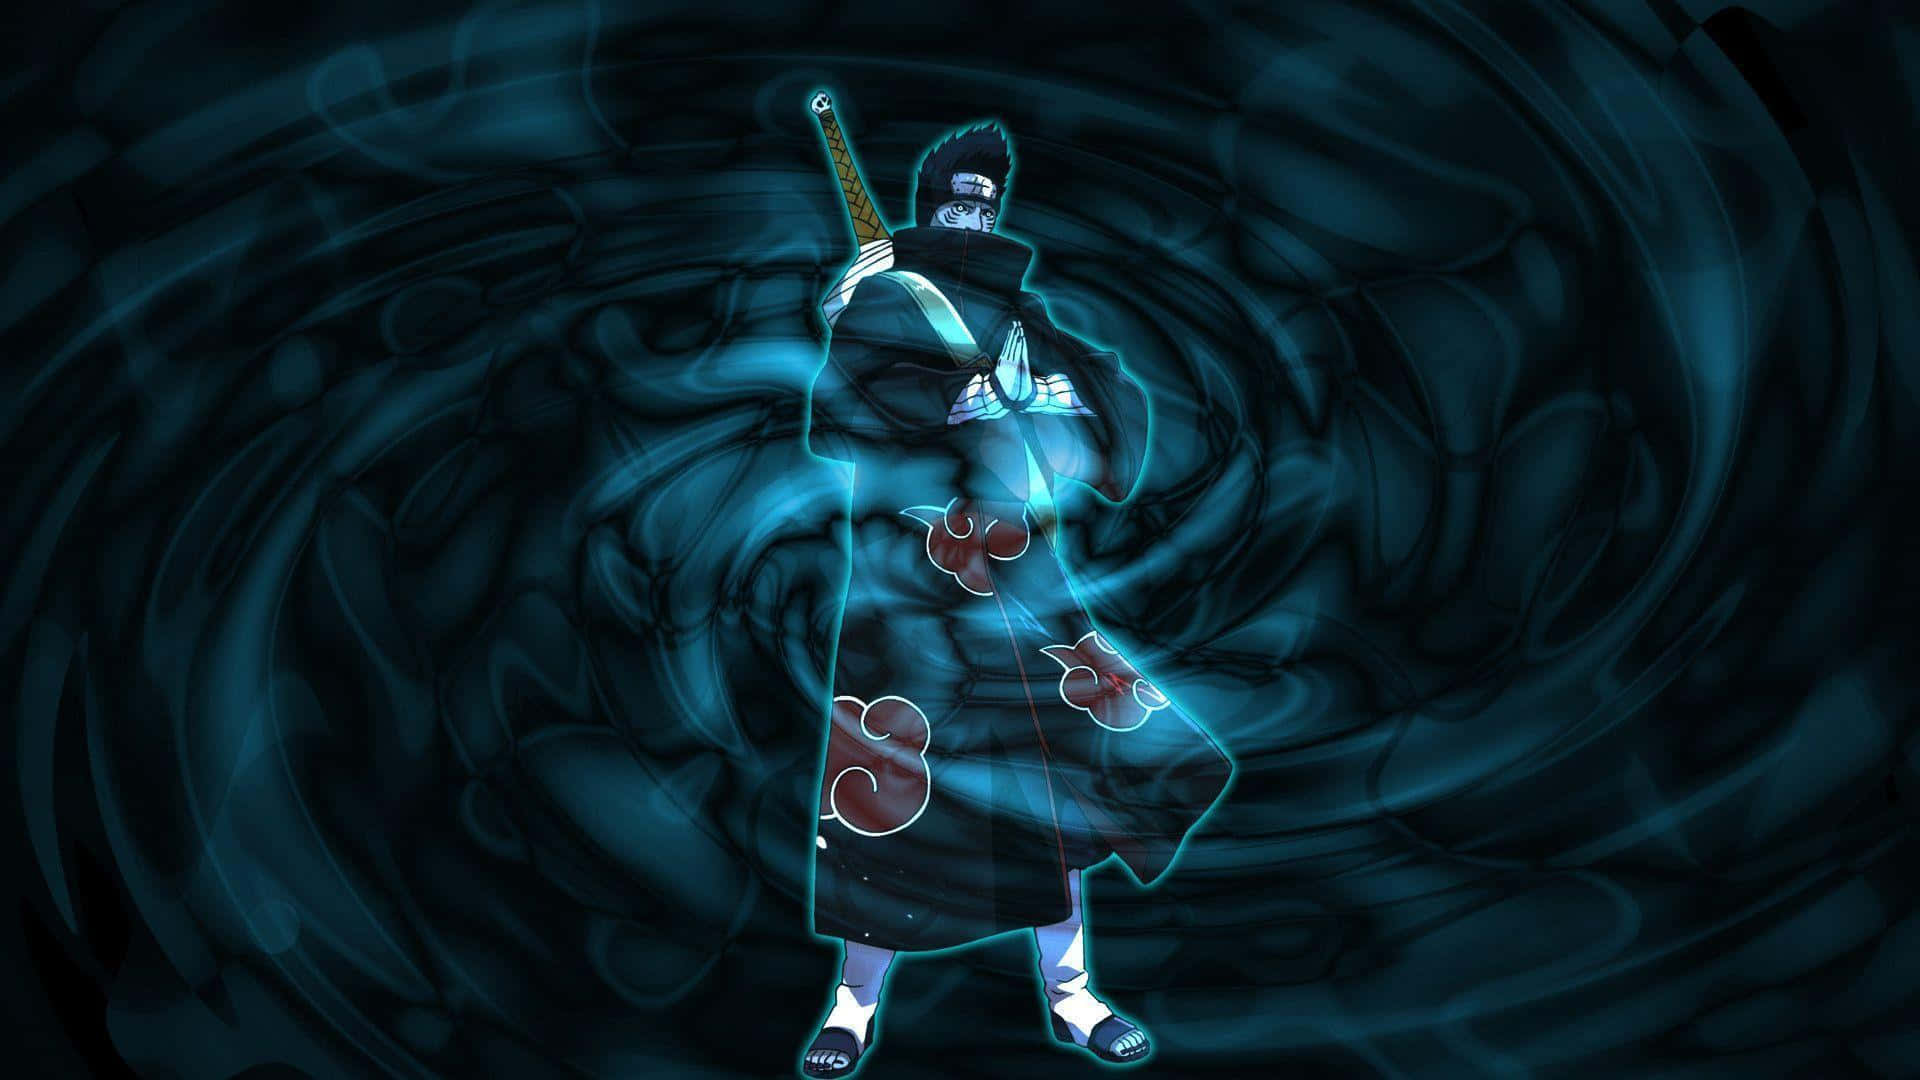 Enigmatic Warrior Kisame in Action. Wallpaper